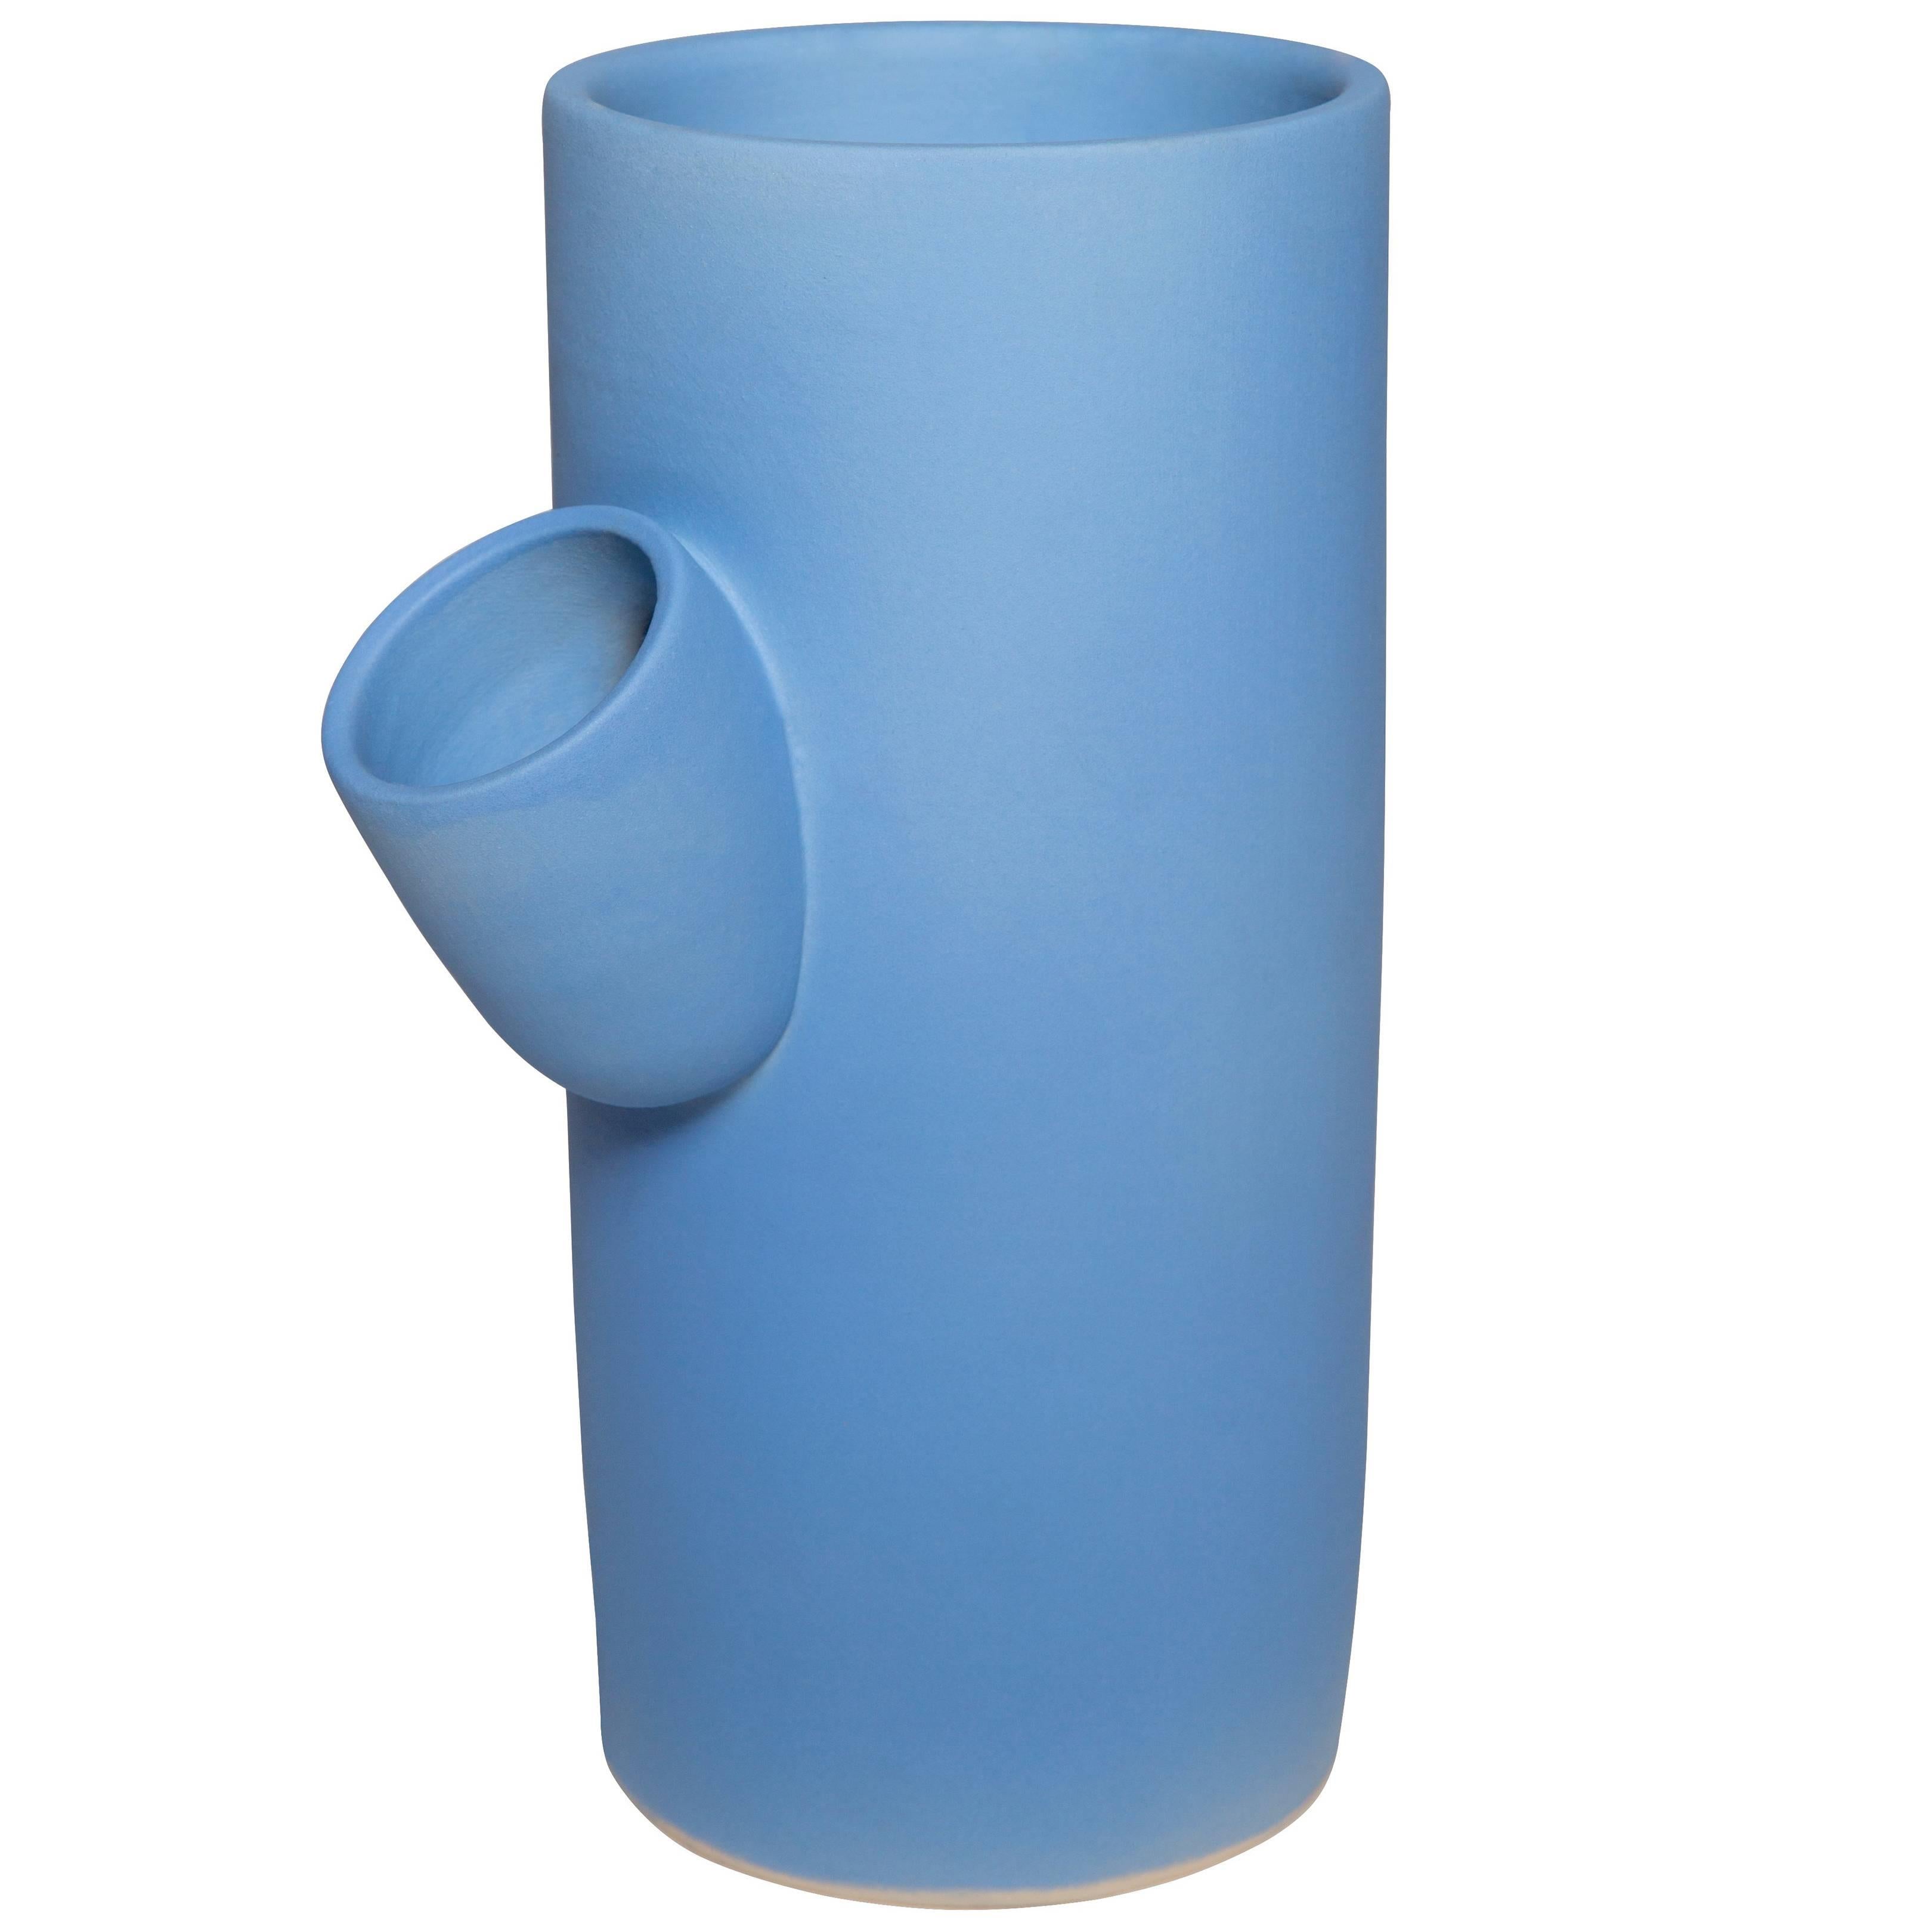  Hydrangea Ceramic Handmade Vase by Pieces, Modern Customizable Blue Pitcher For Sale